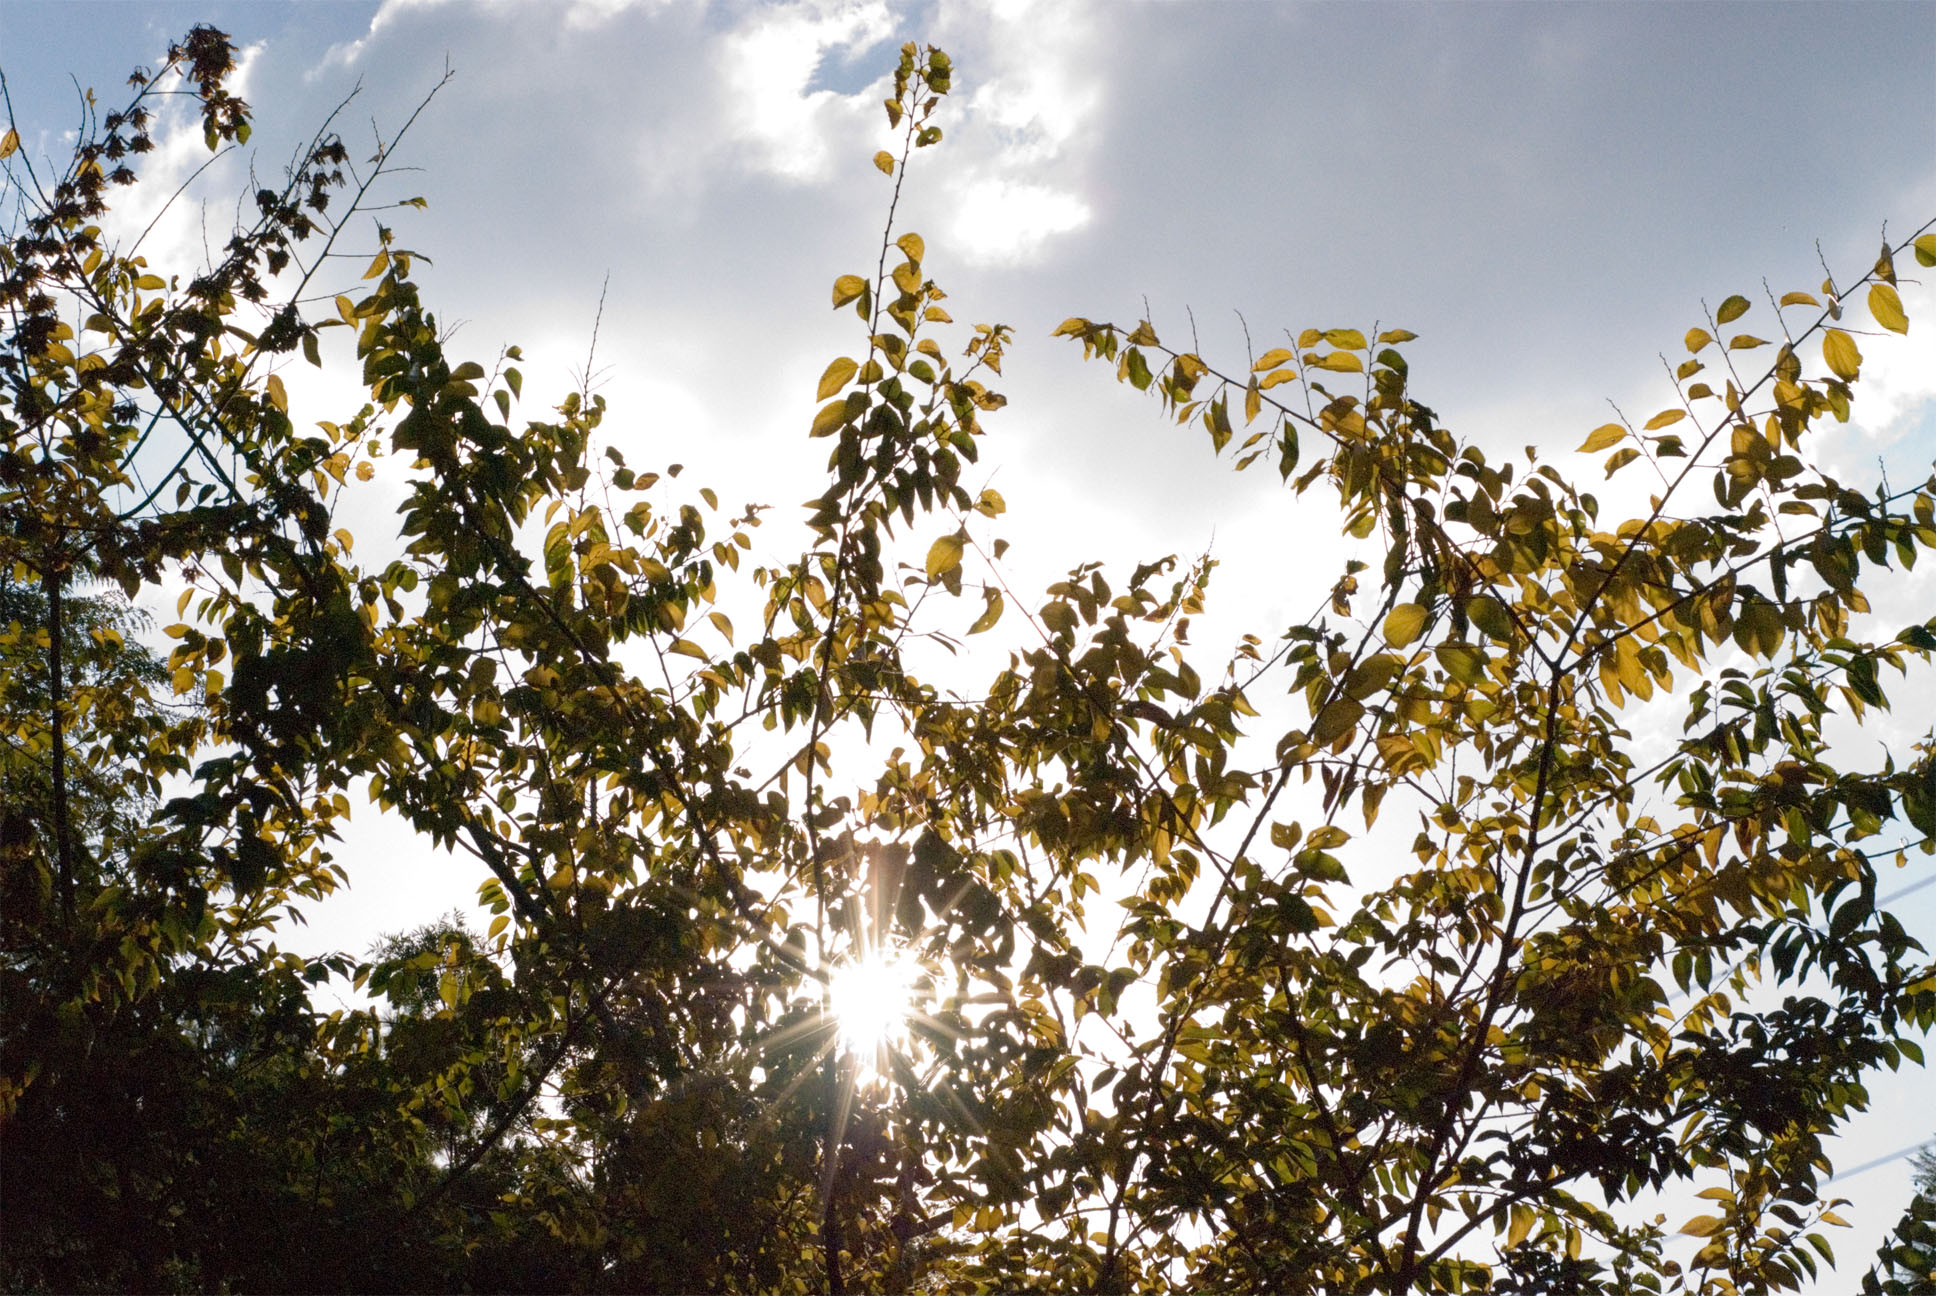 the sun peeking through the leaves on the trees